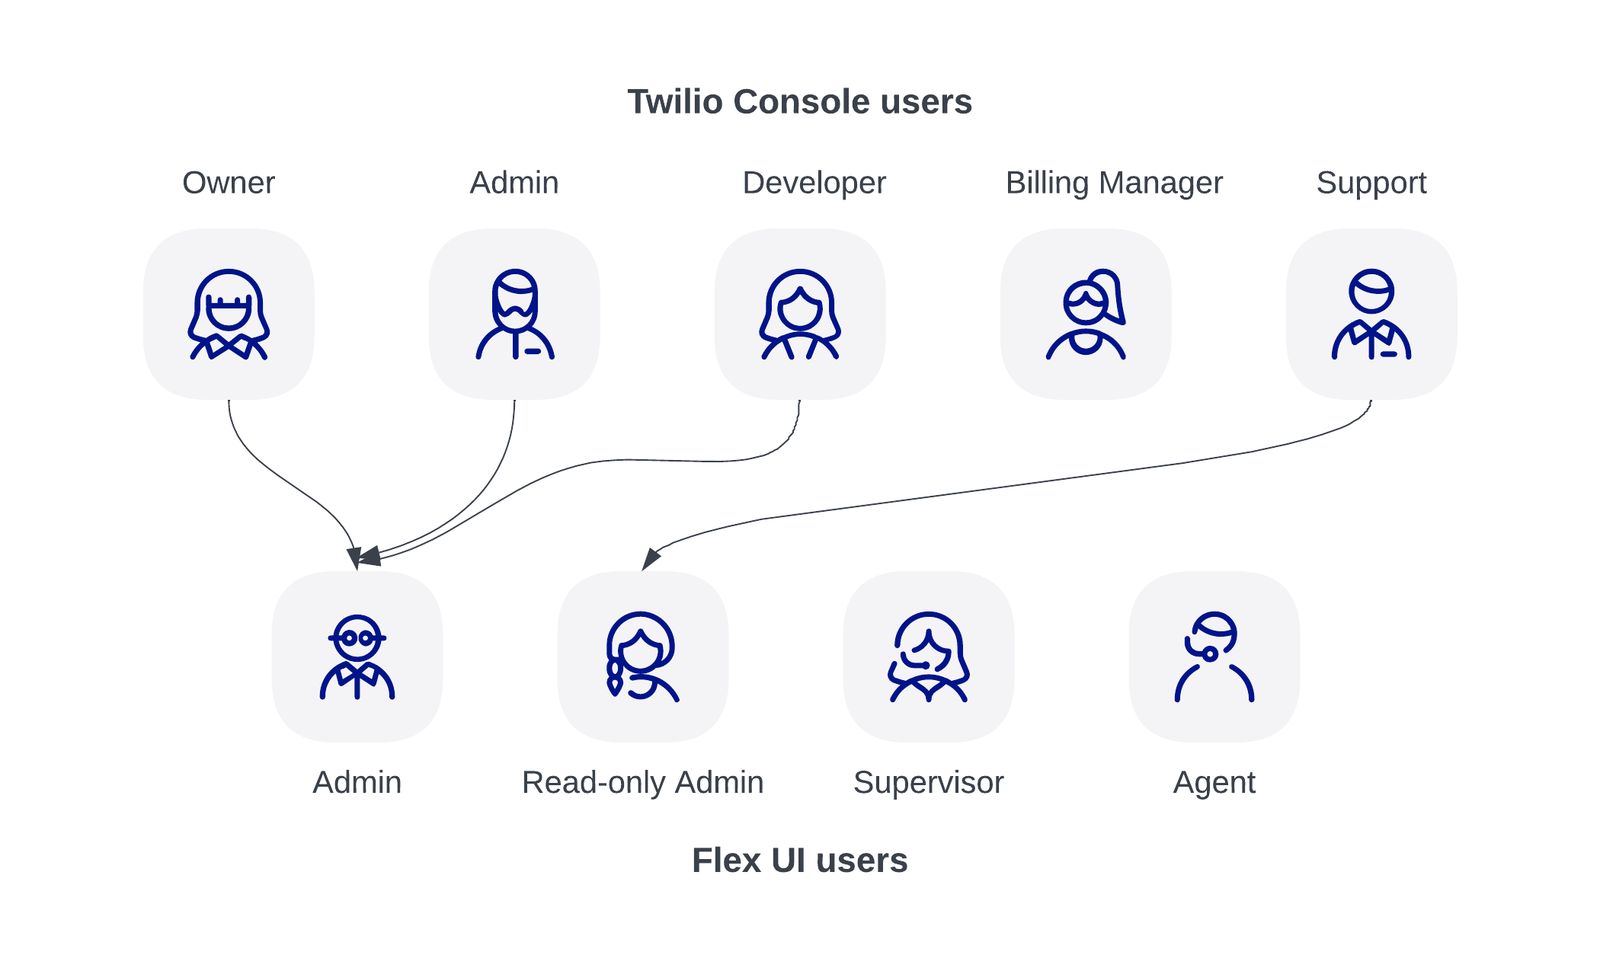 Twilio Console and Flex UI users.